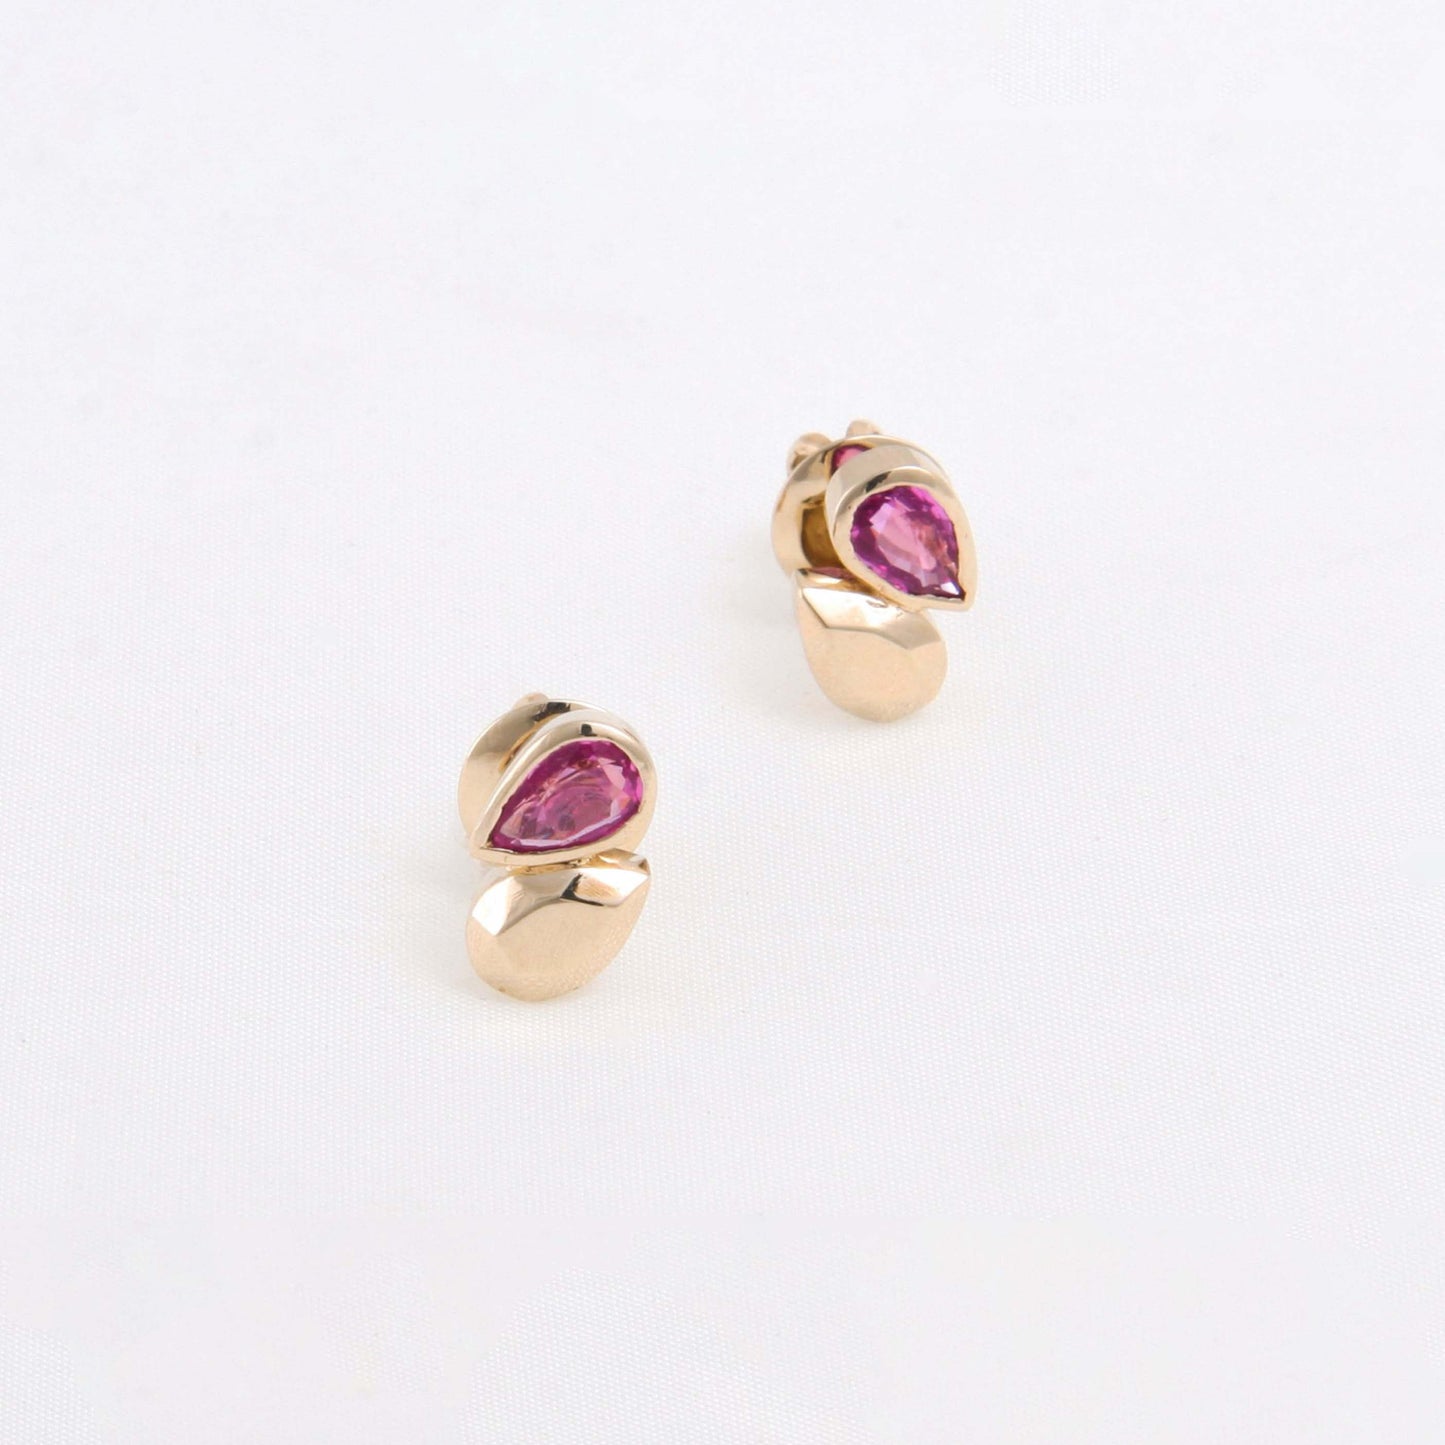 The Aradhana Gold and Pink Sapphire Ear Studs by Rasvihar